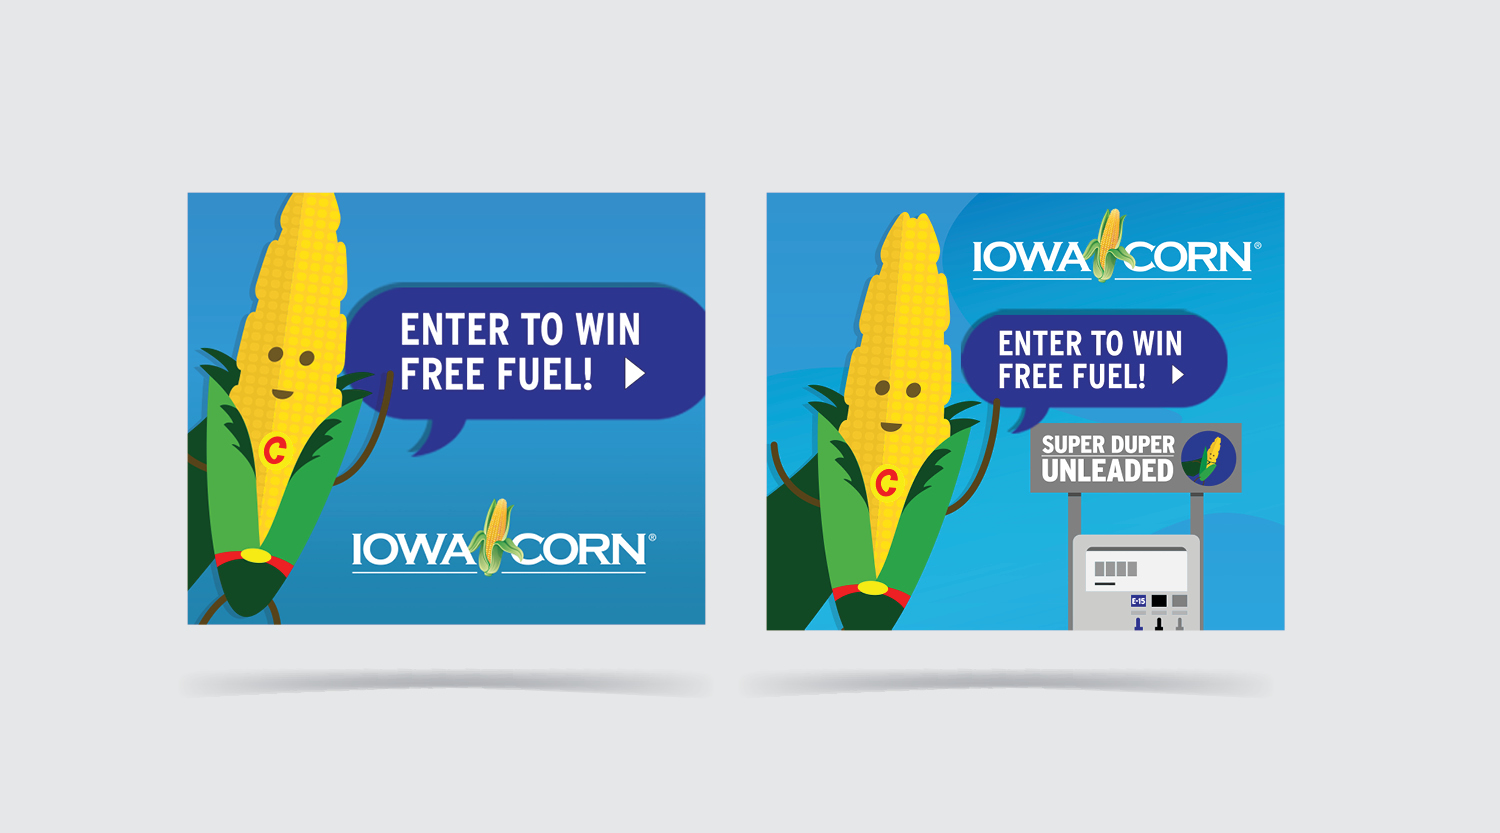 The super duper campaign that convinced Iowans to buy E-151